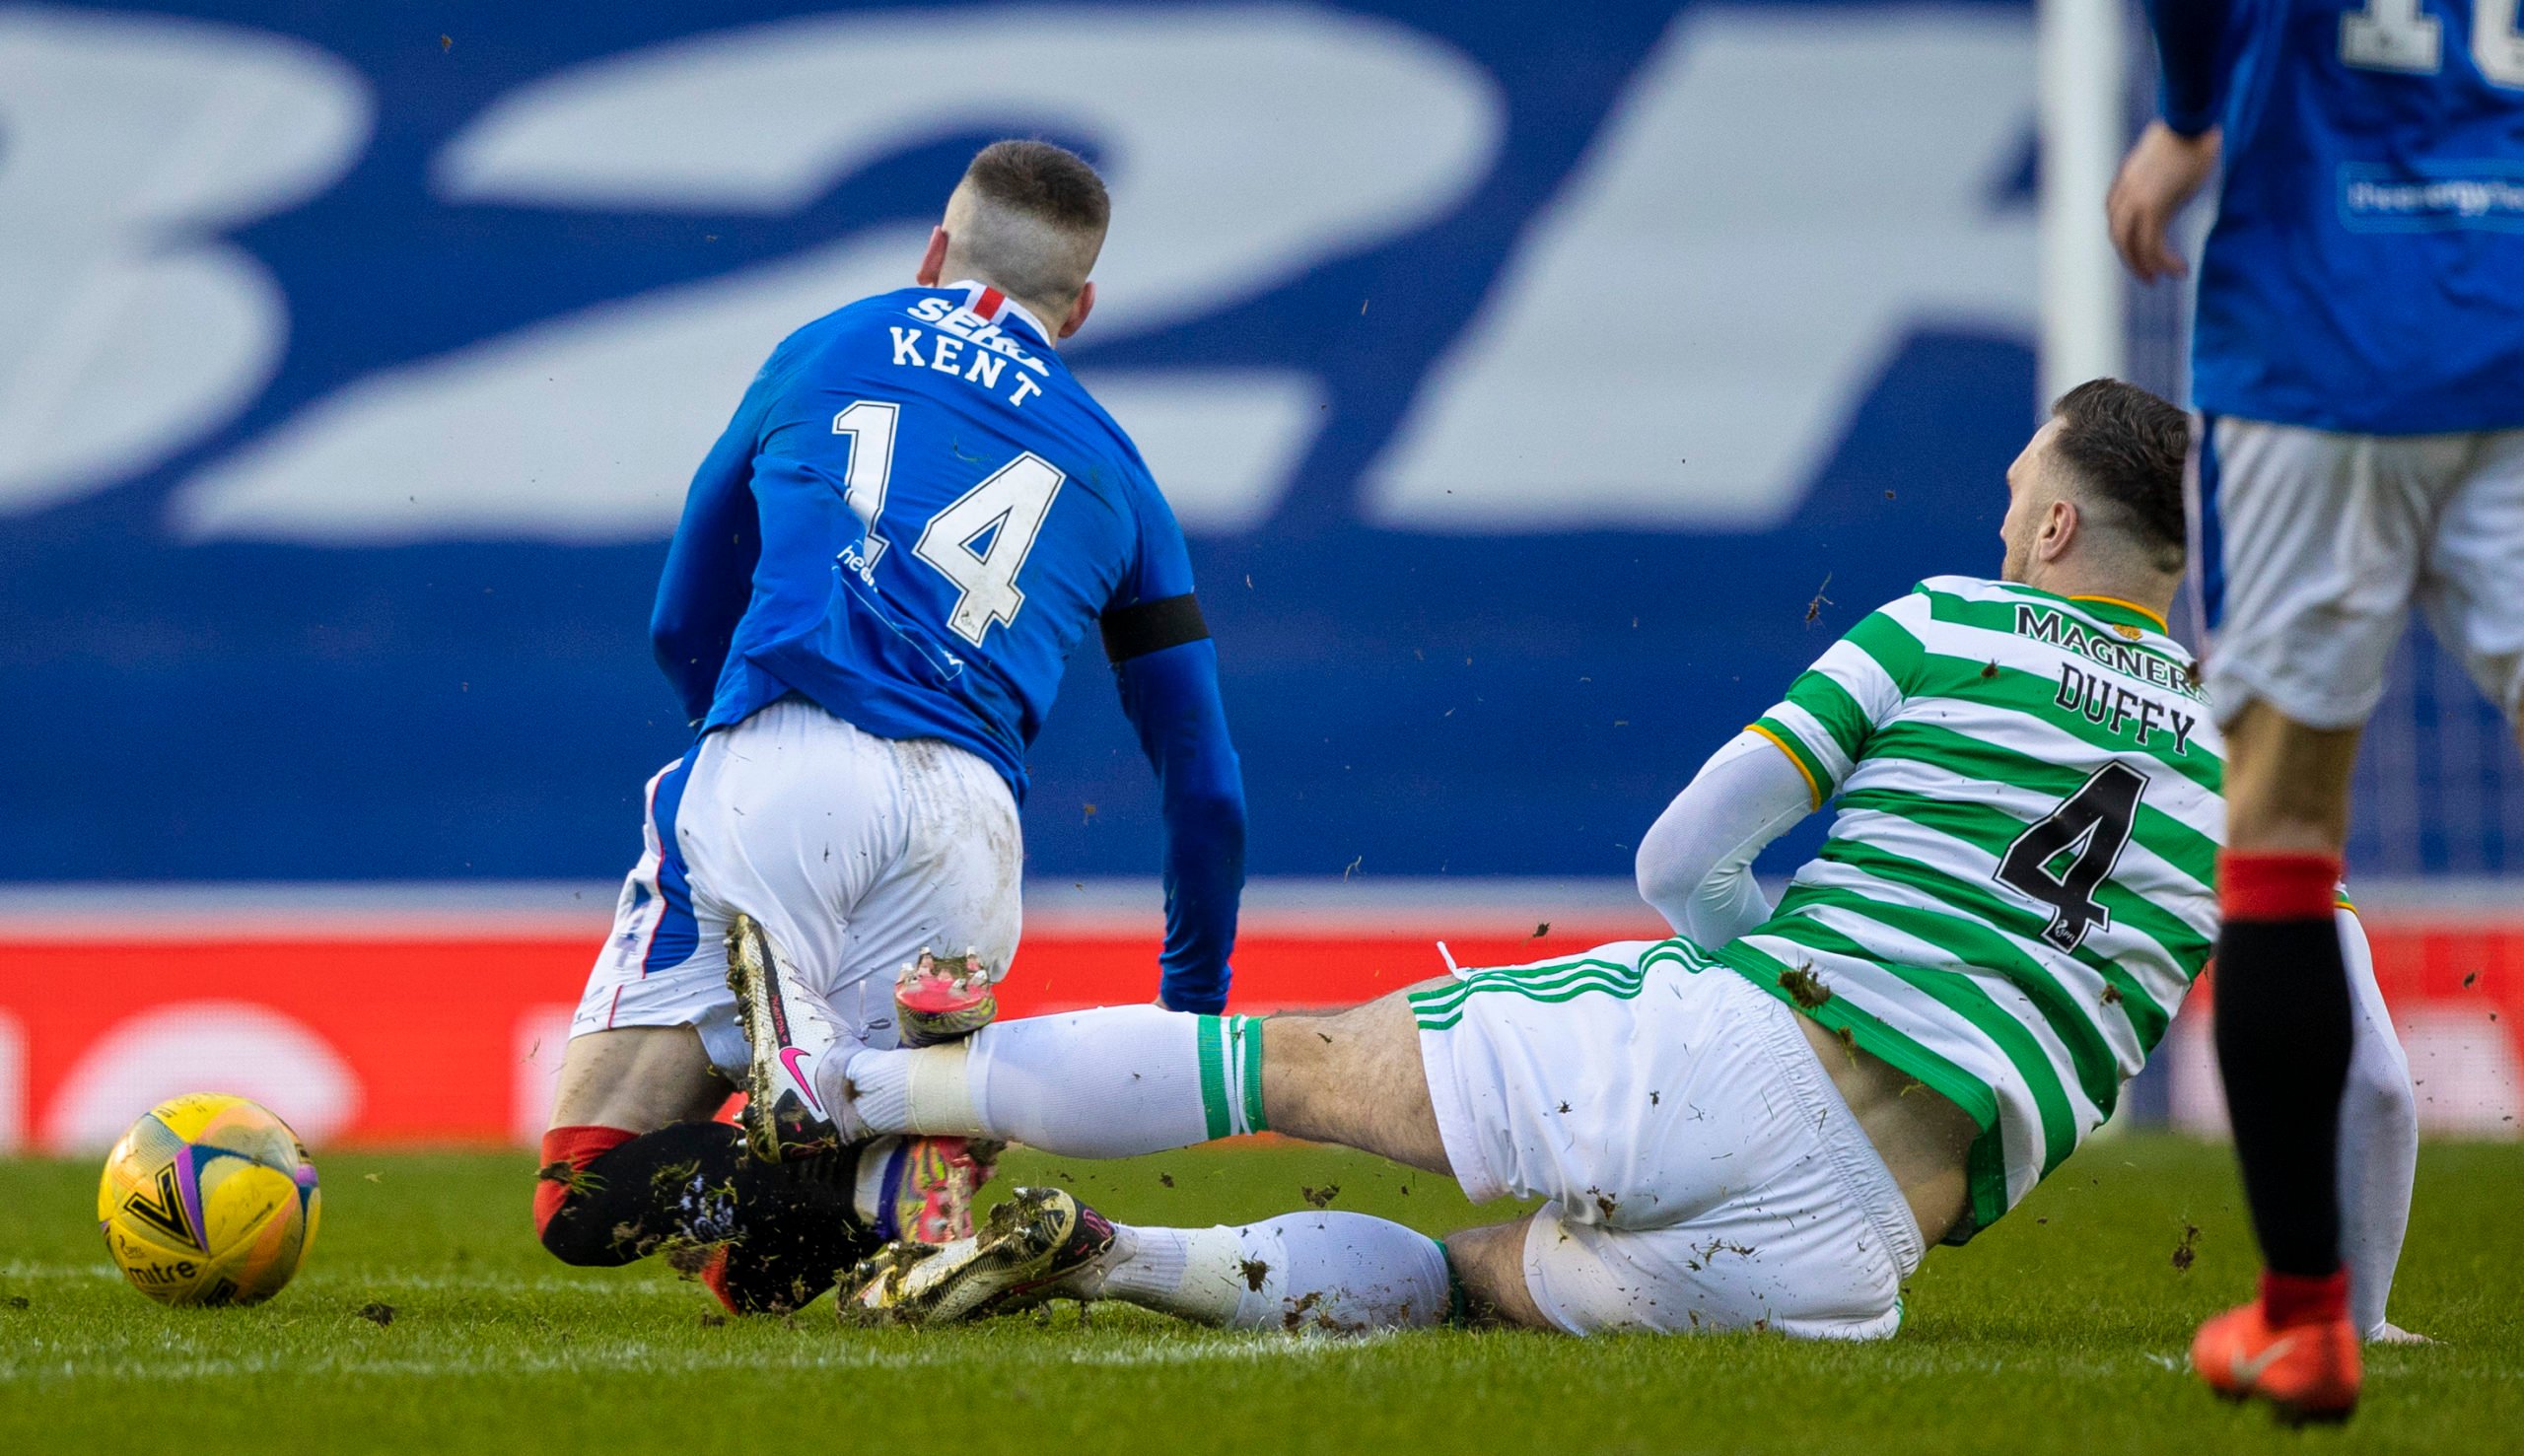 Celtic defender Shane Duffy takes down Ryan Kent